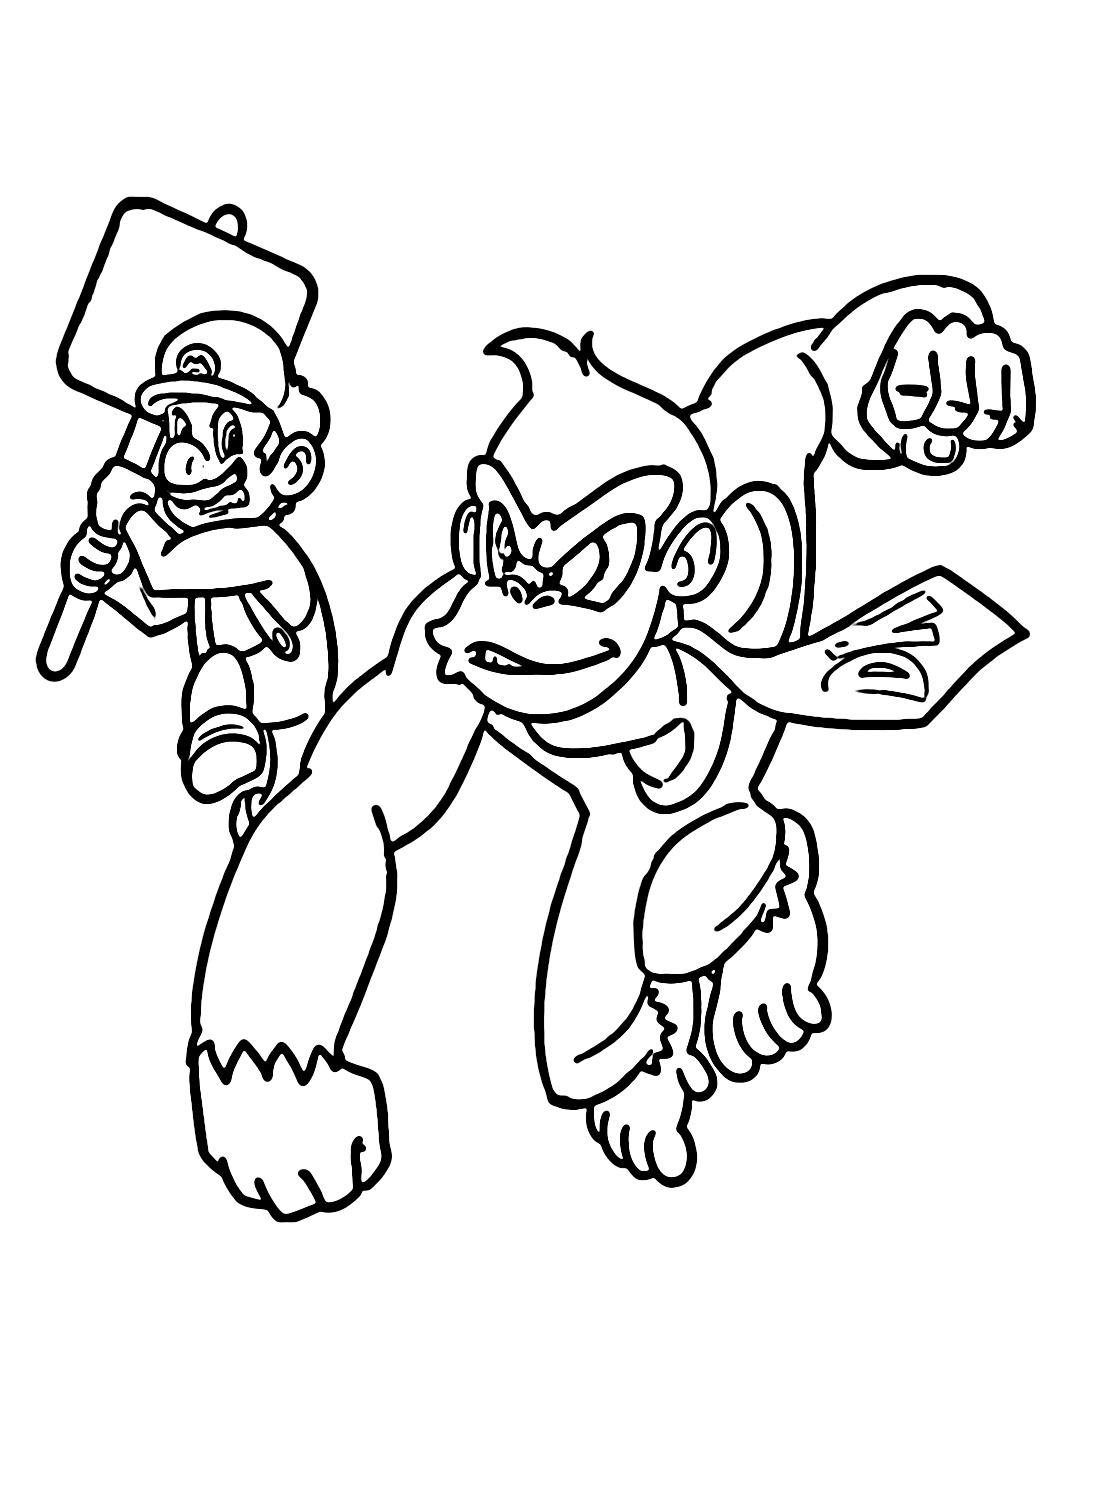 Mario contro Donkey Kong da Donkey Kong